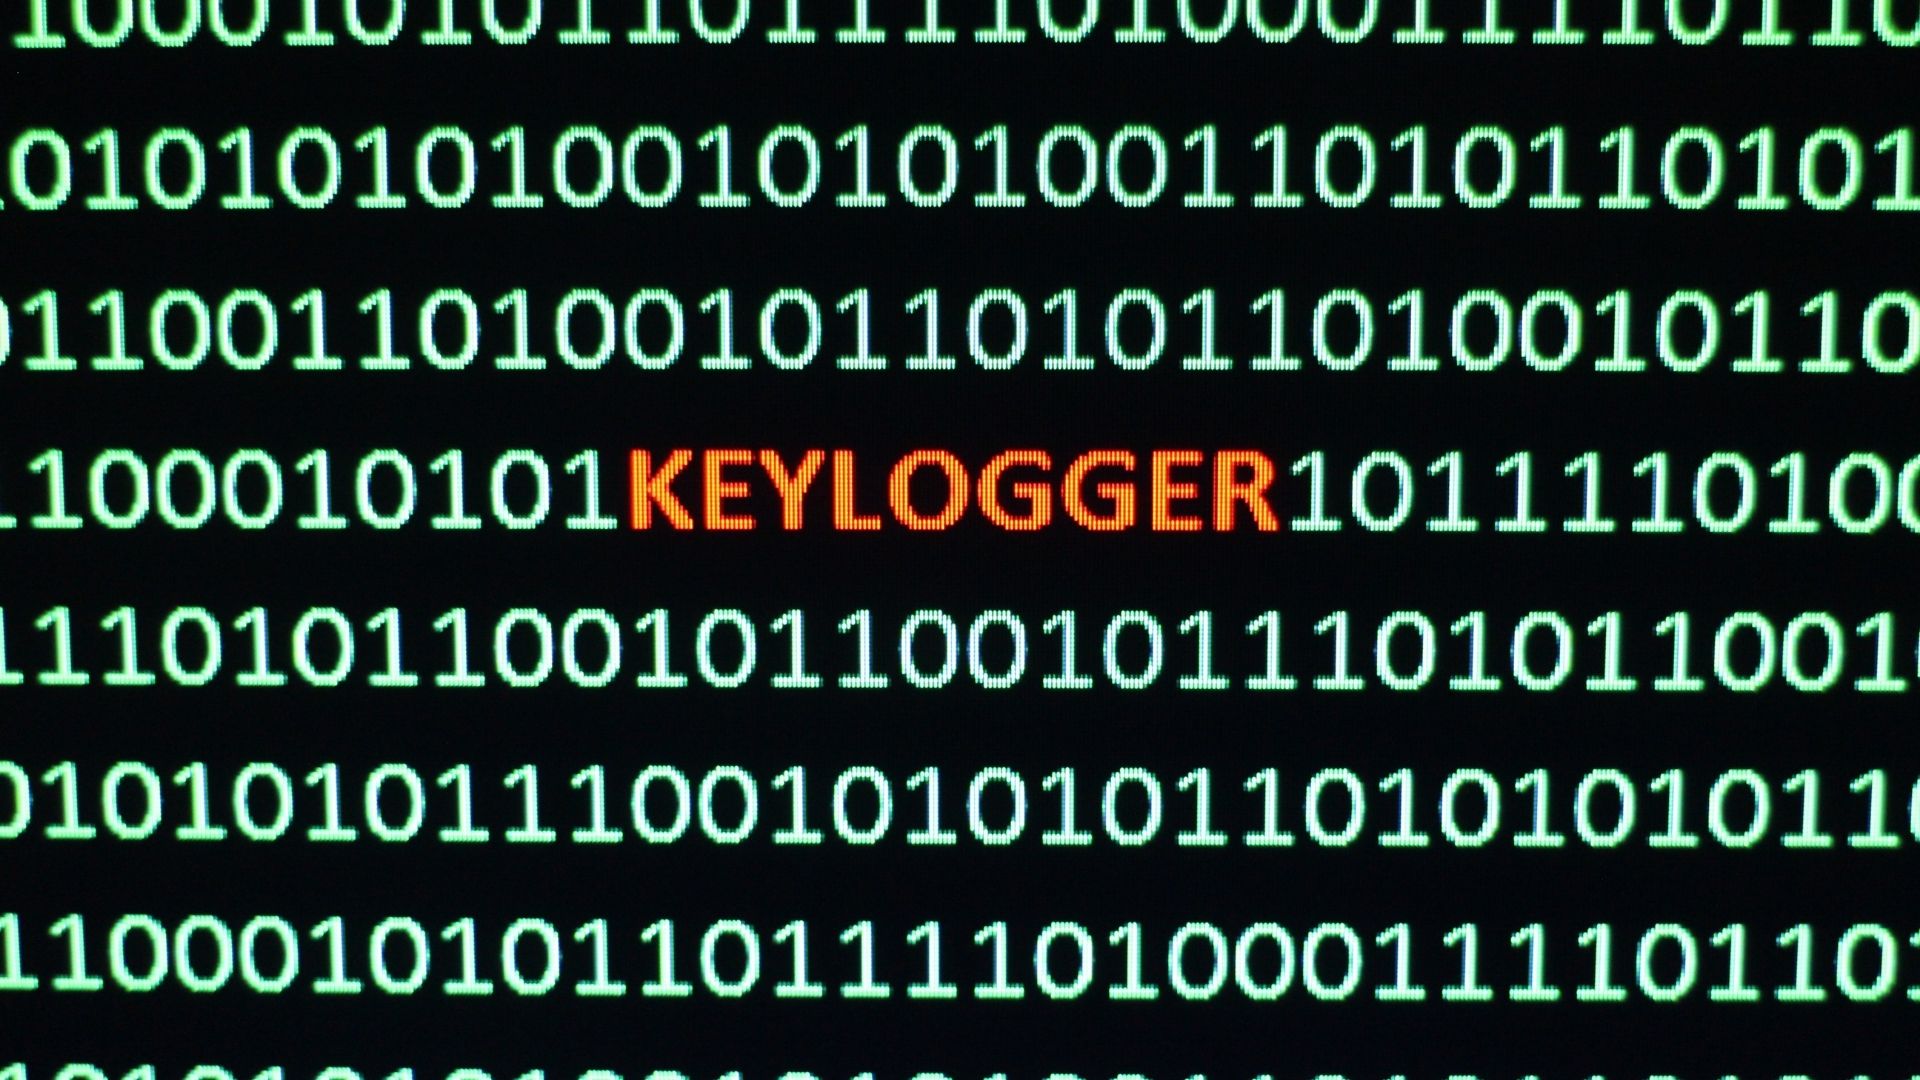 Keylogging